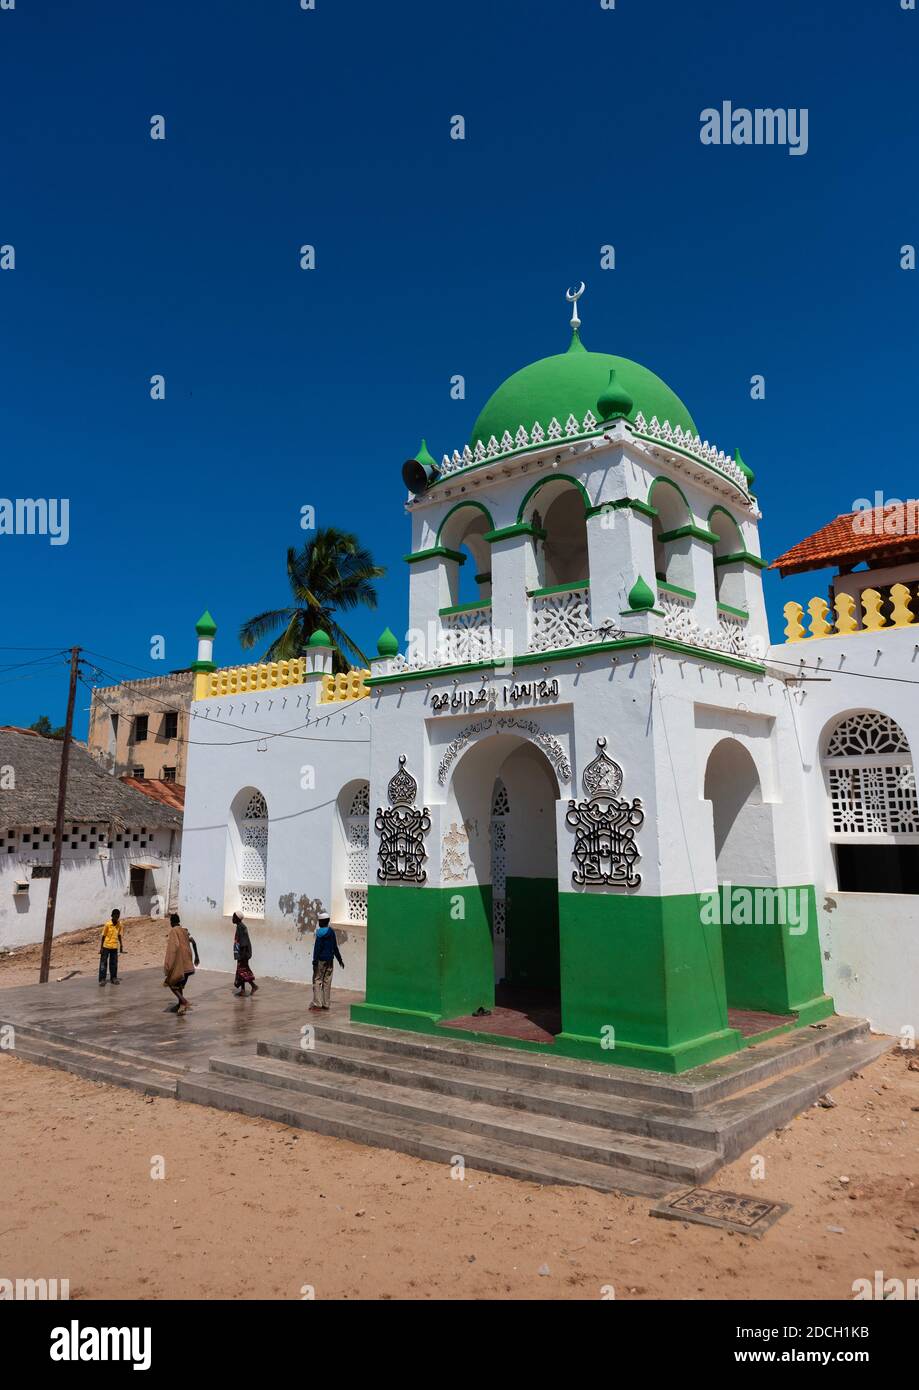 Mosque with a green dome, Lamu County, Lamu, Kenya Stock Photo